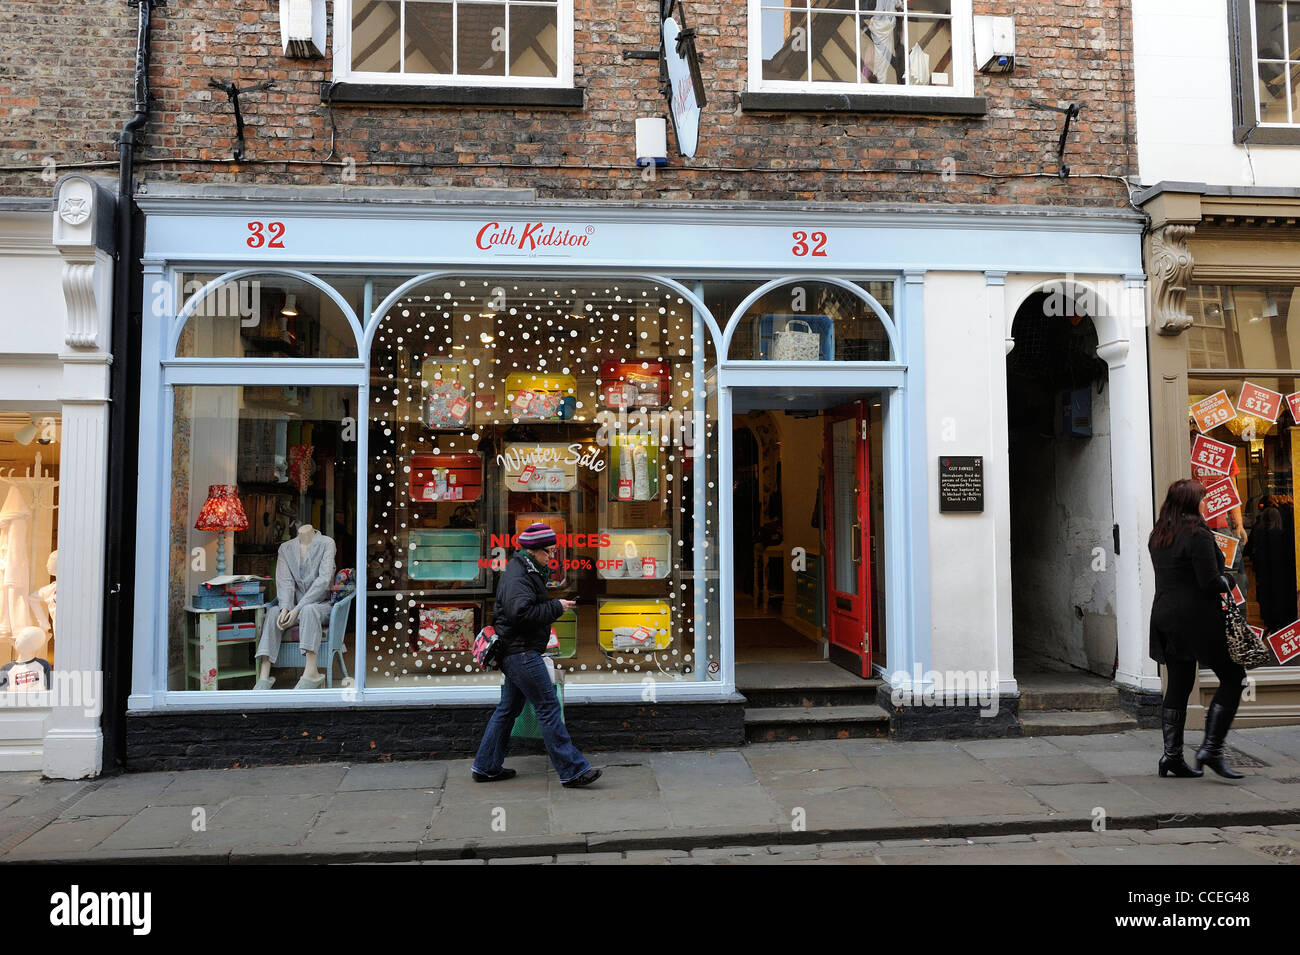 Cath Kidston shop front york england uk 